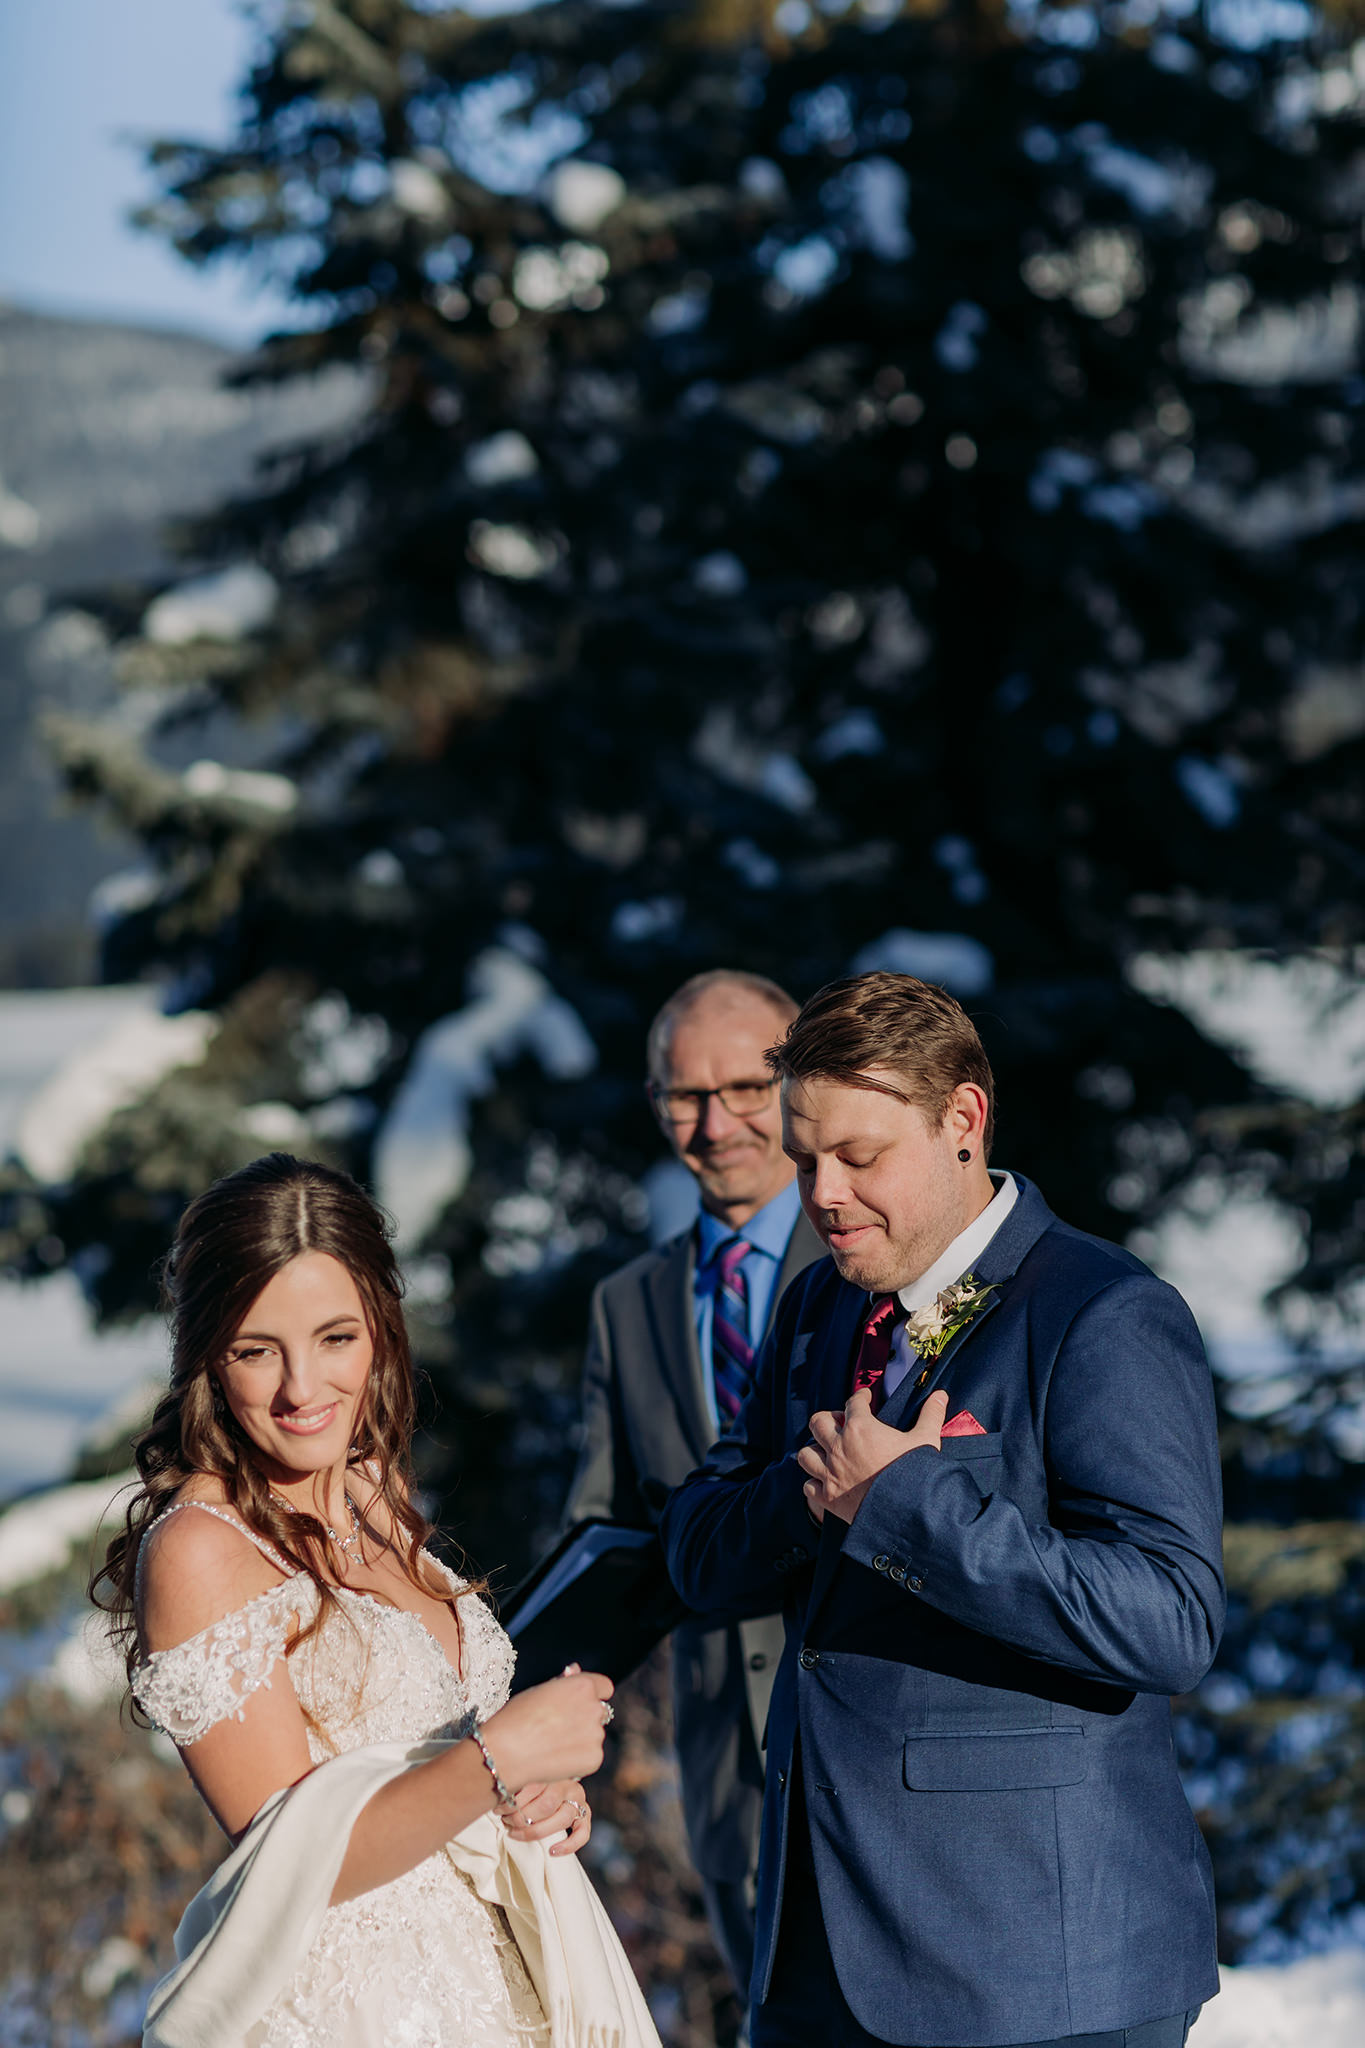 november wedding at Emerald Lake Lodge in the mountains